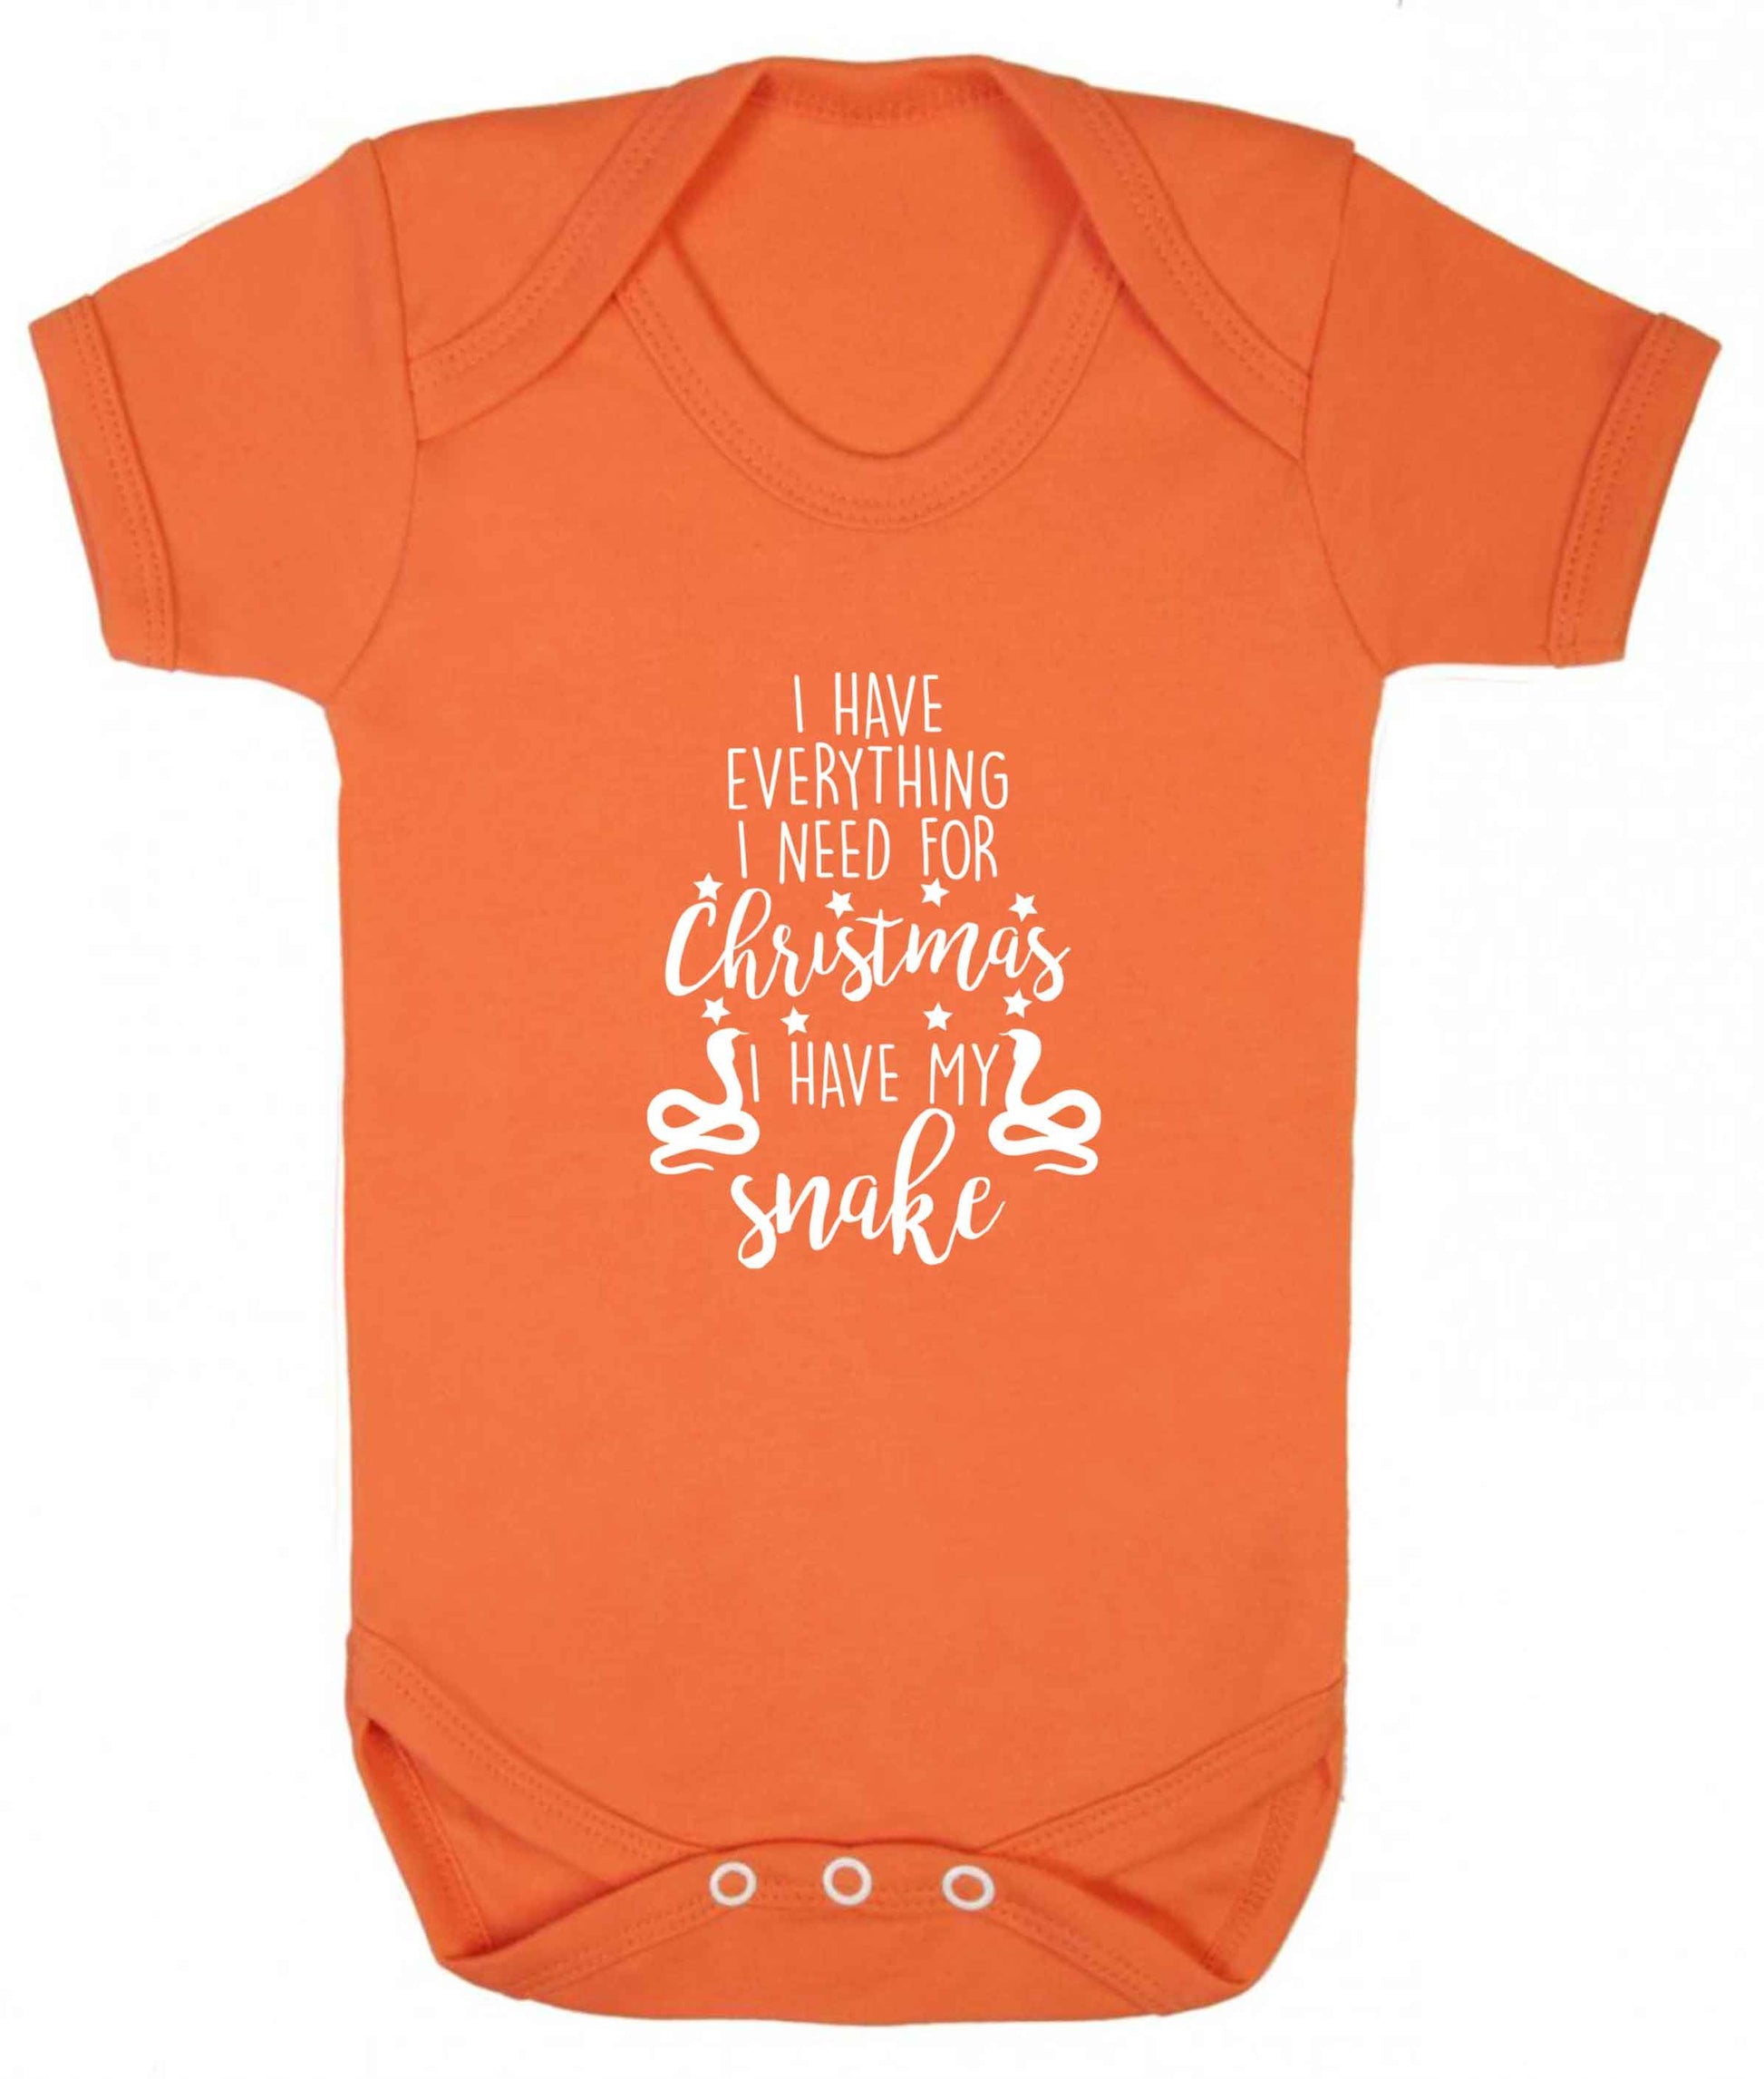 I have everything I need for Christmas I have my snake baby vest orange 18-24 months